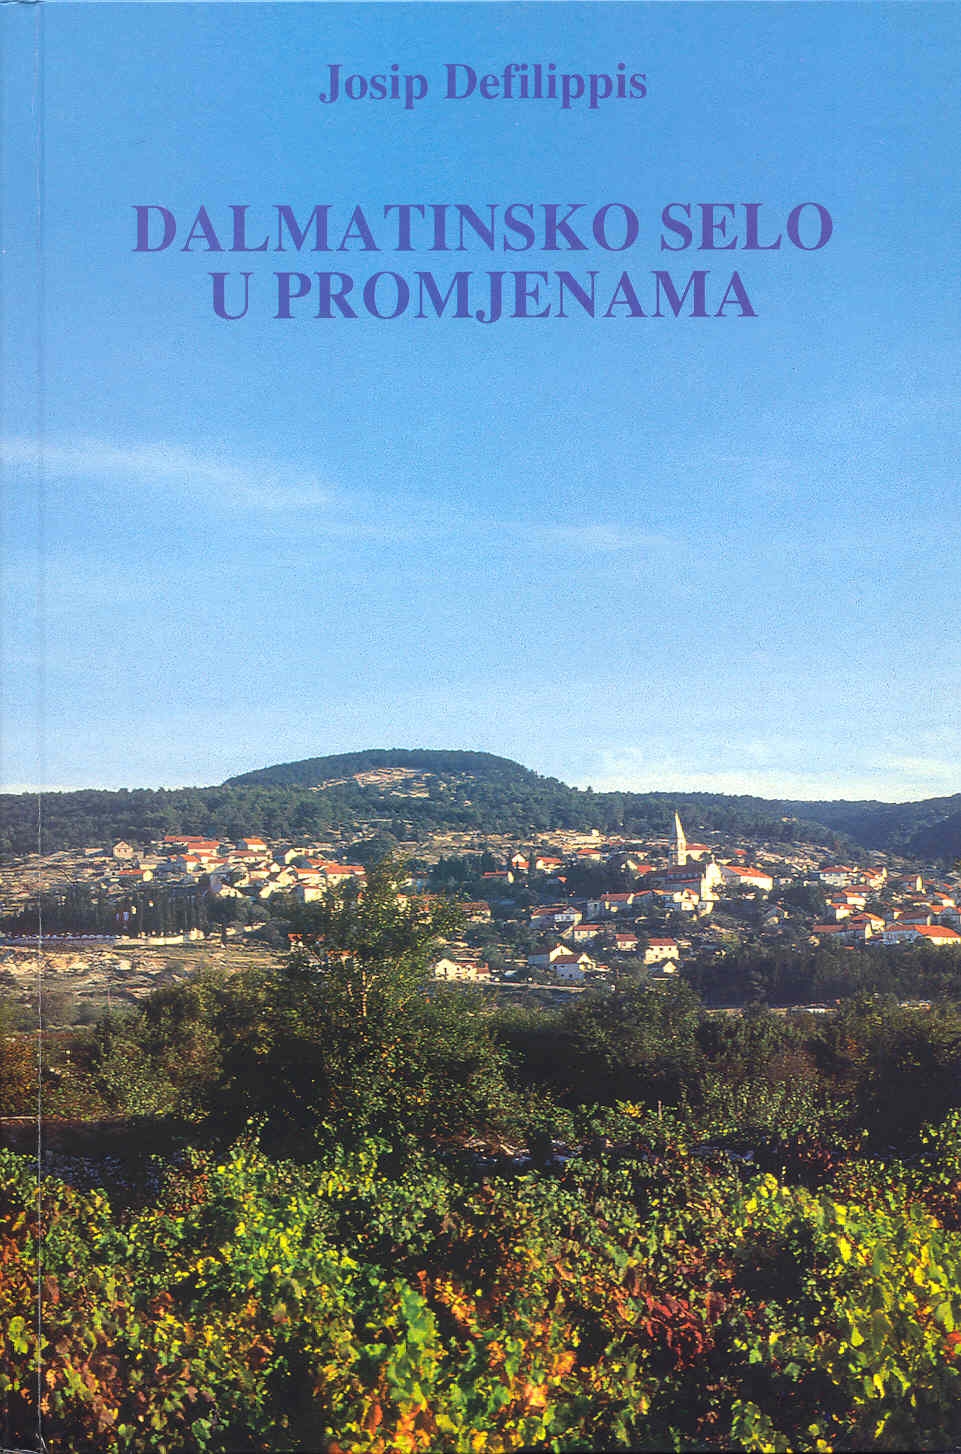 Dalmatinsko selo u promjenama : dva stoljeća sela i poljoprivrede Dalmacije